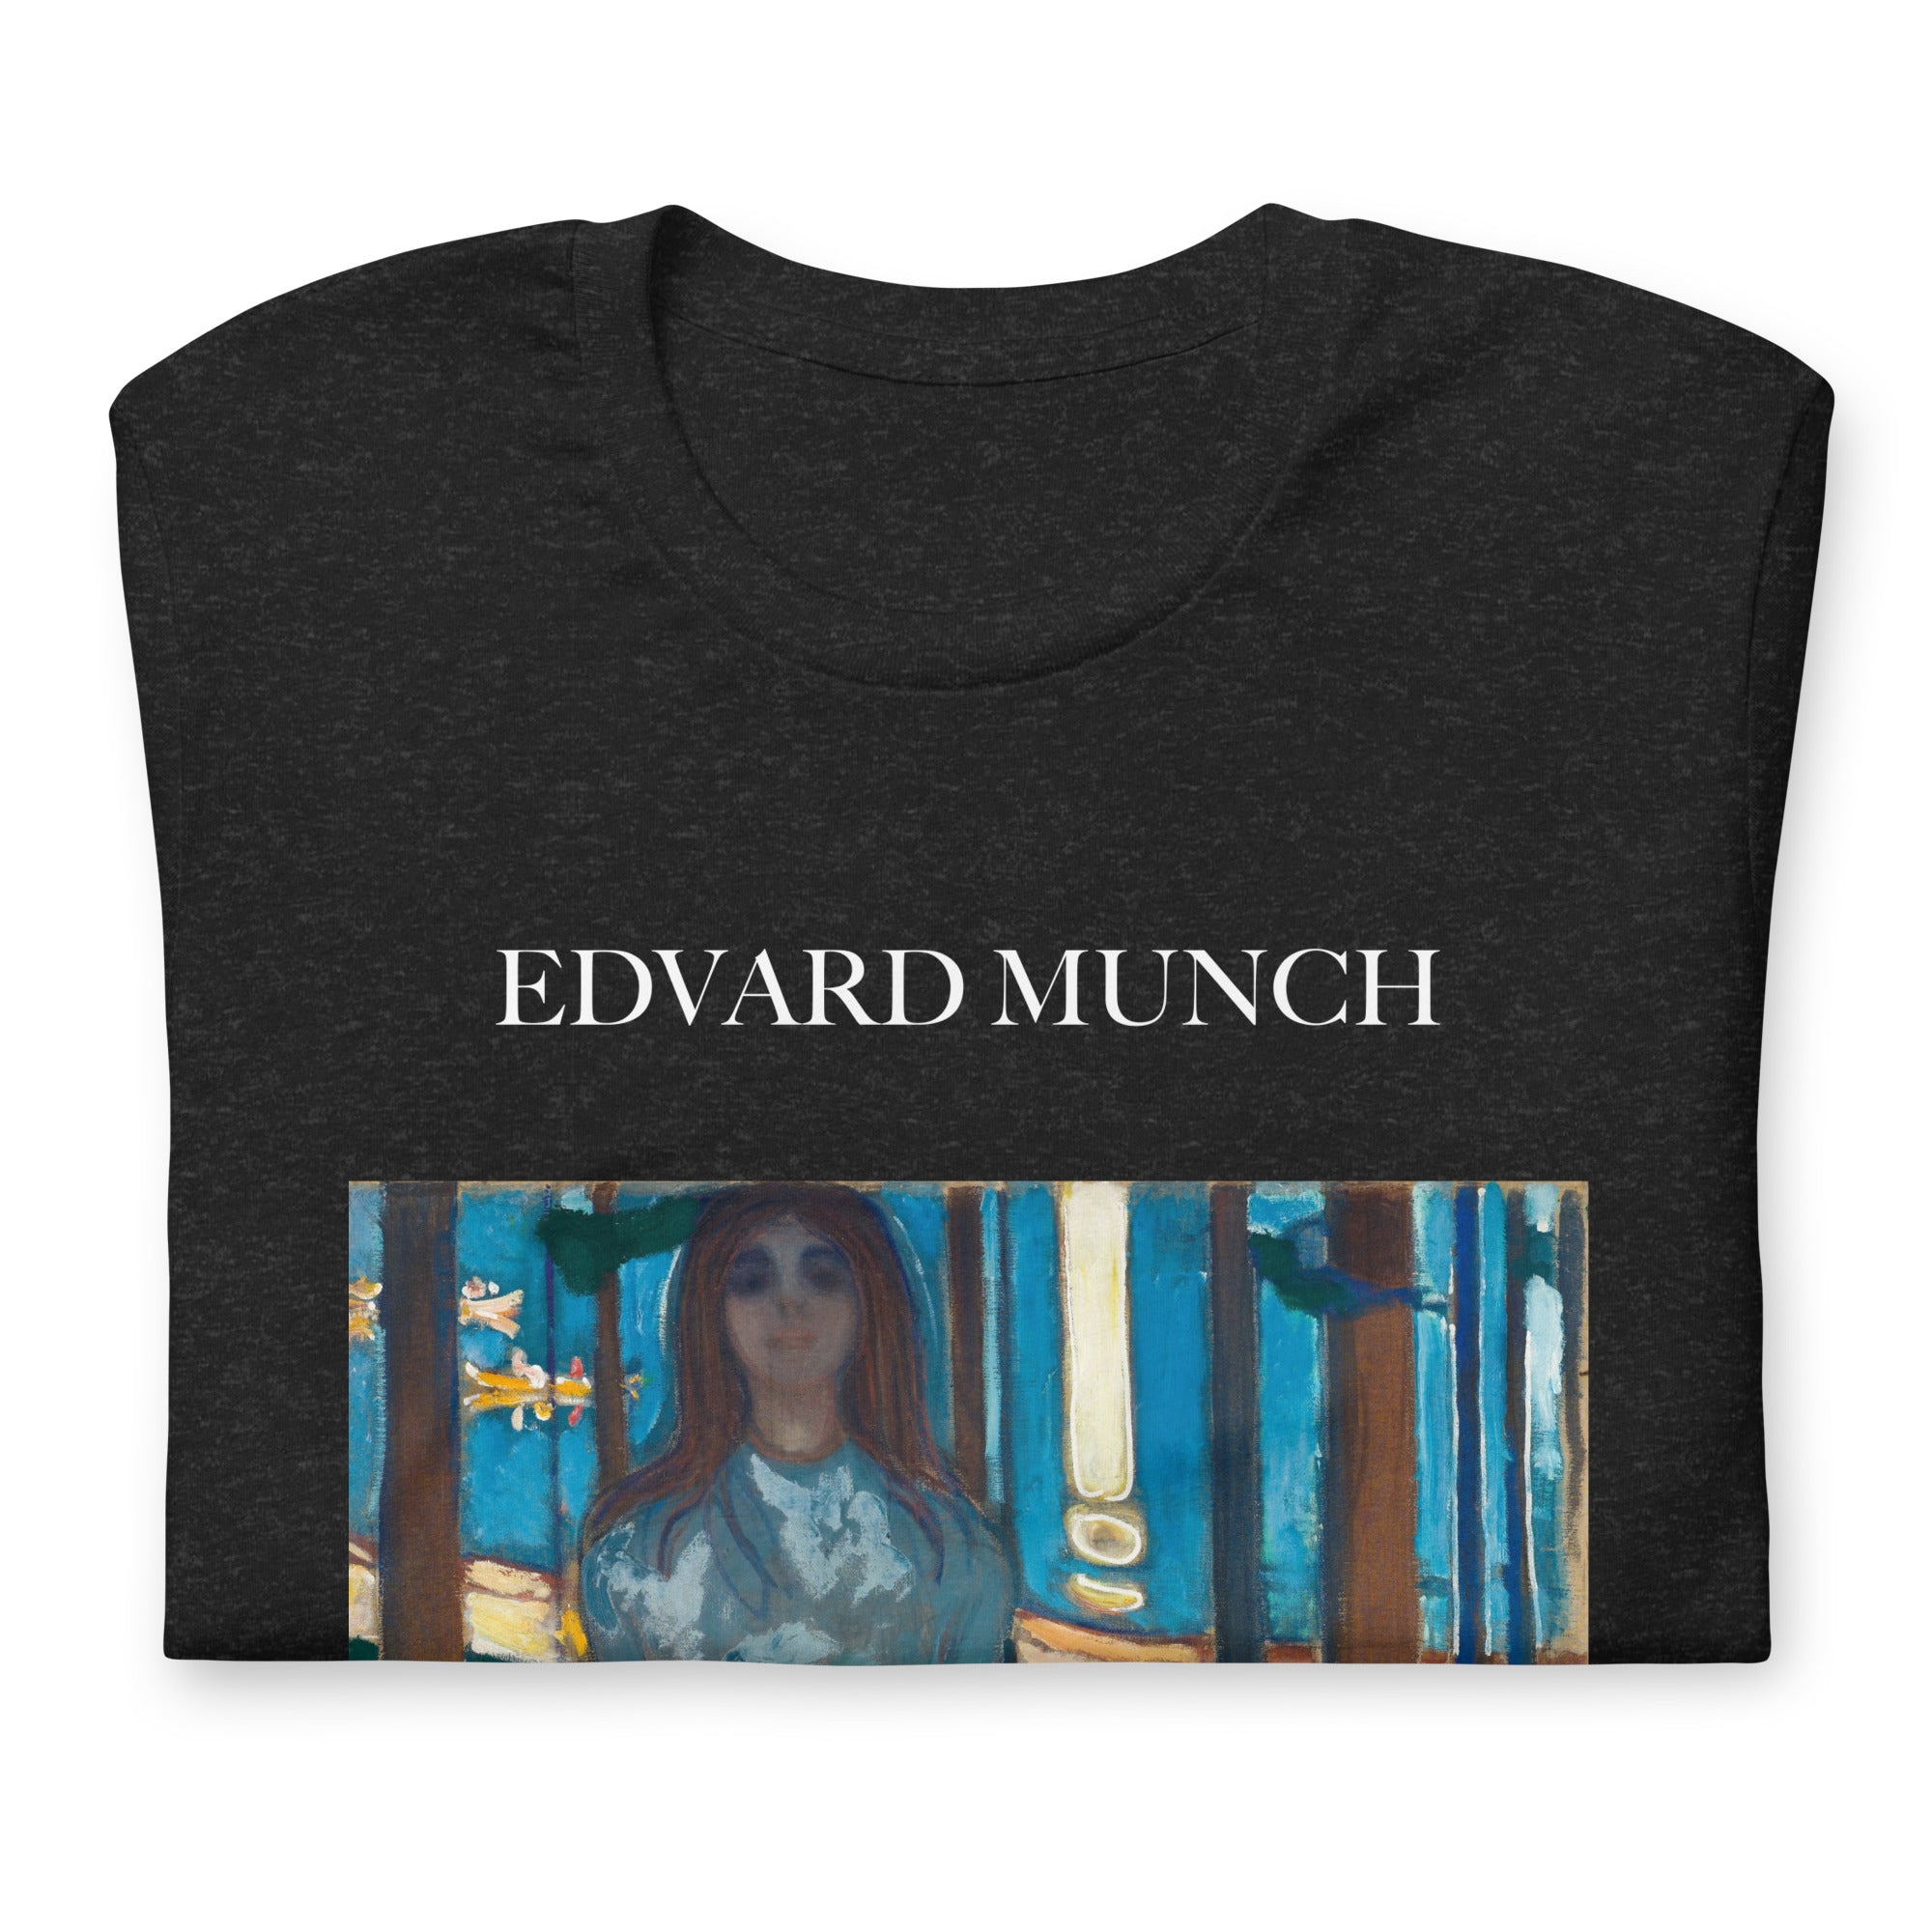 Edvard Munch 'The Voice, Summer Night' Famous Painting T-Shirt | Unisex Classic Art Tee